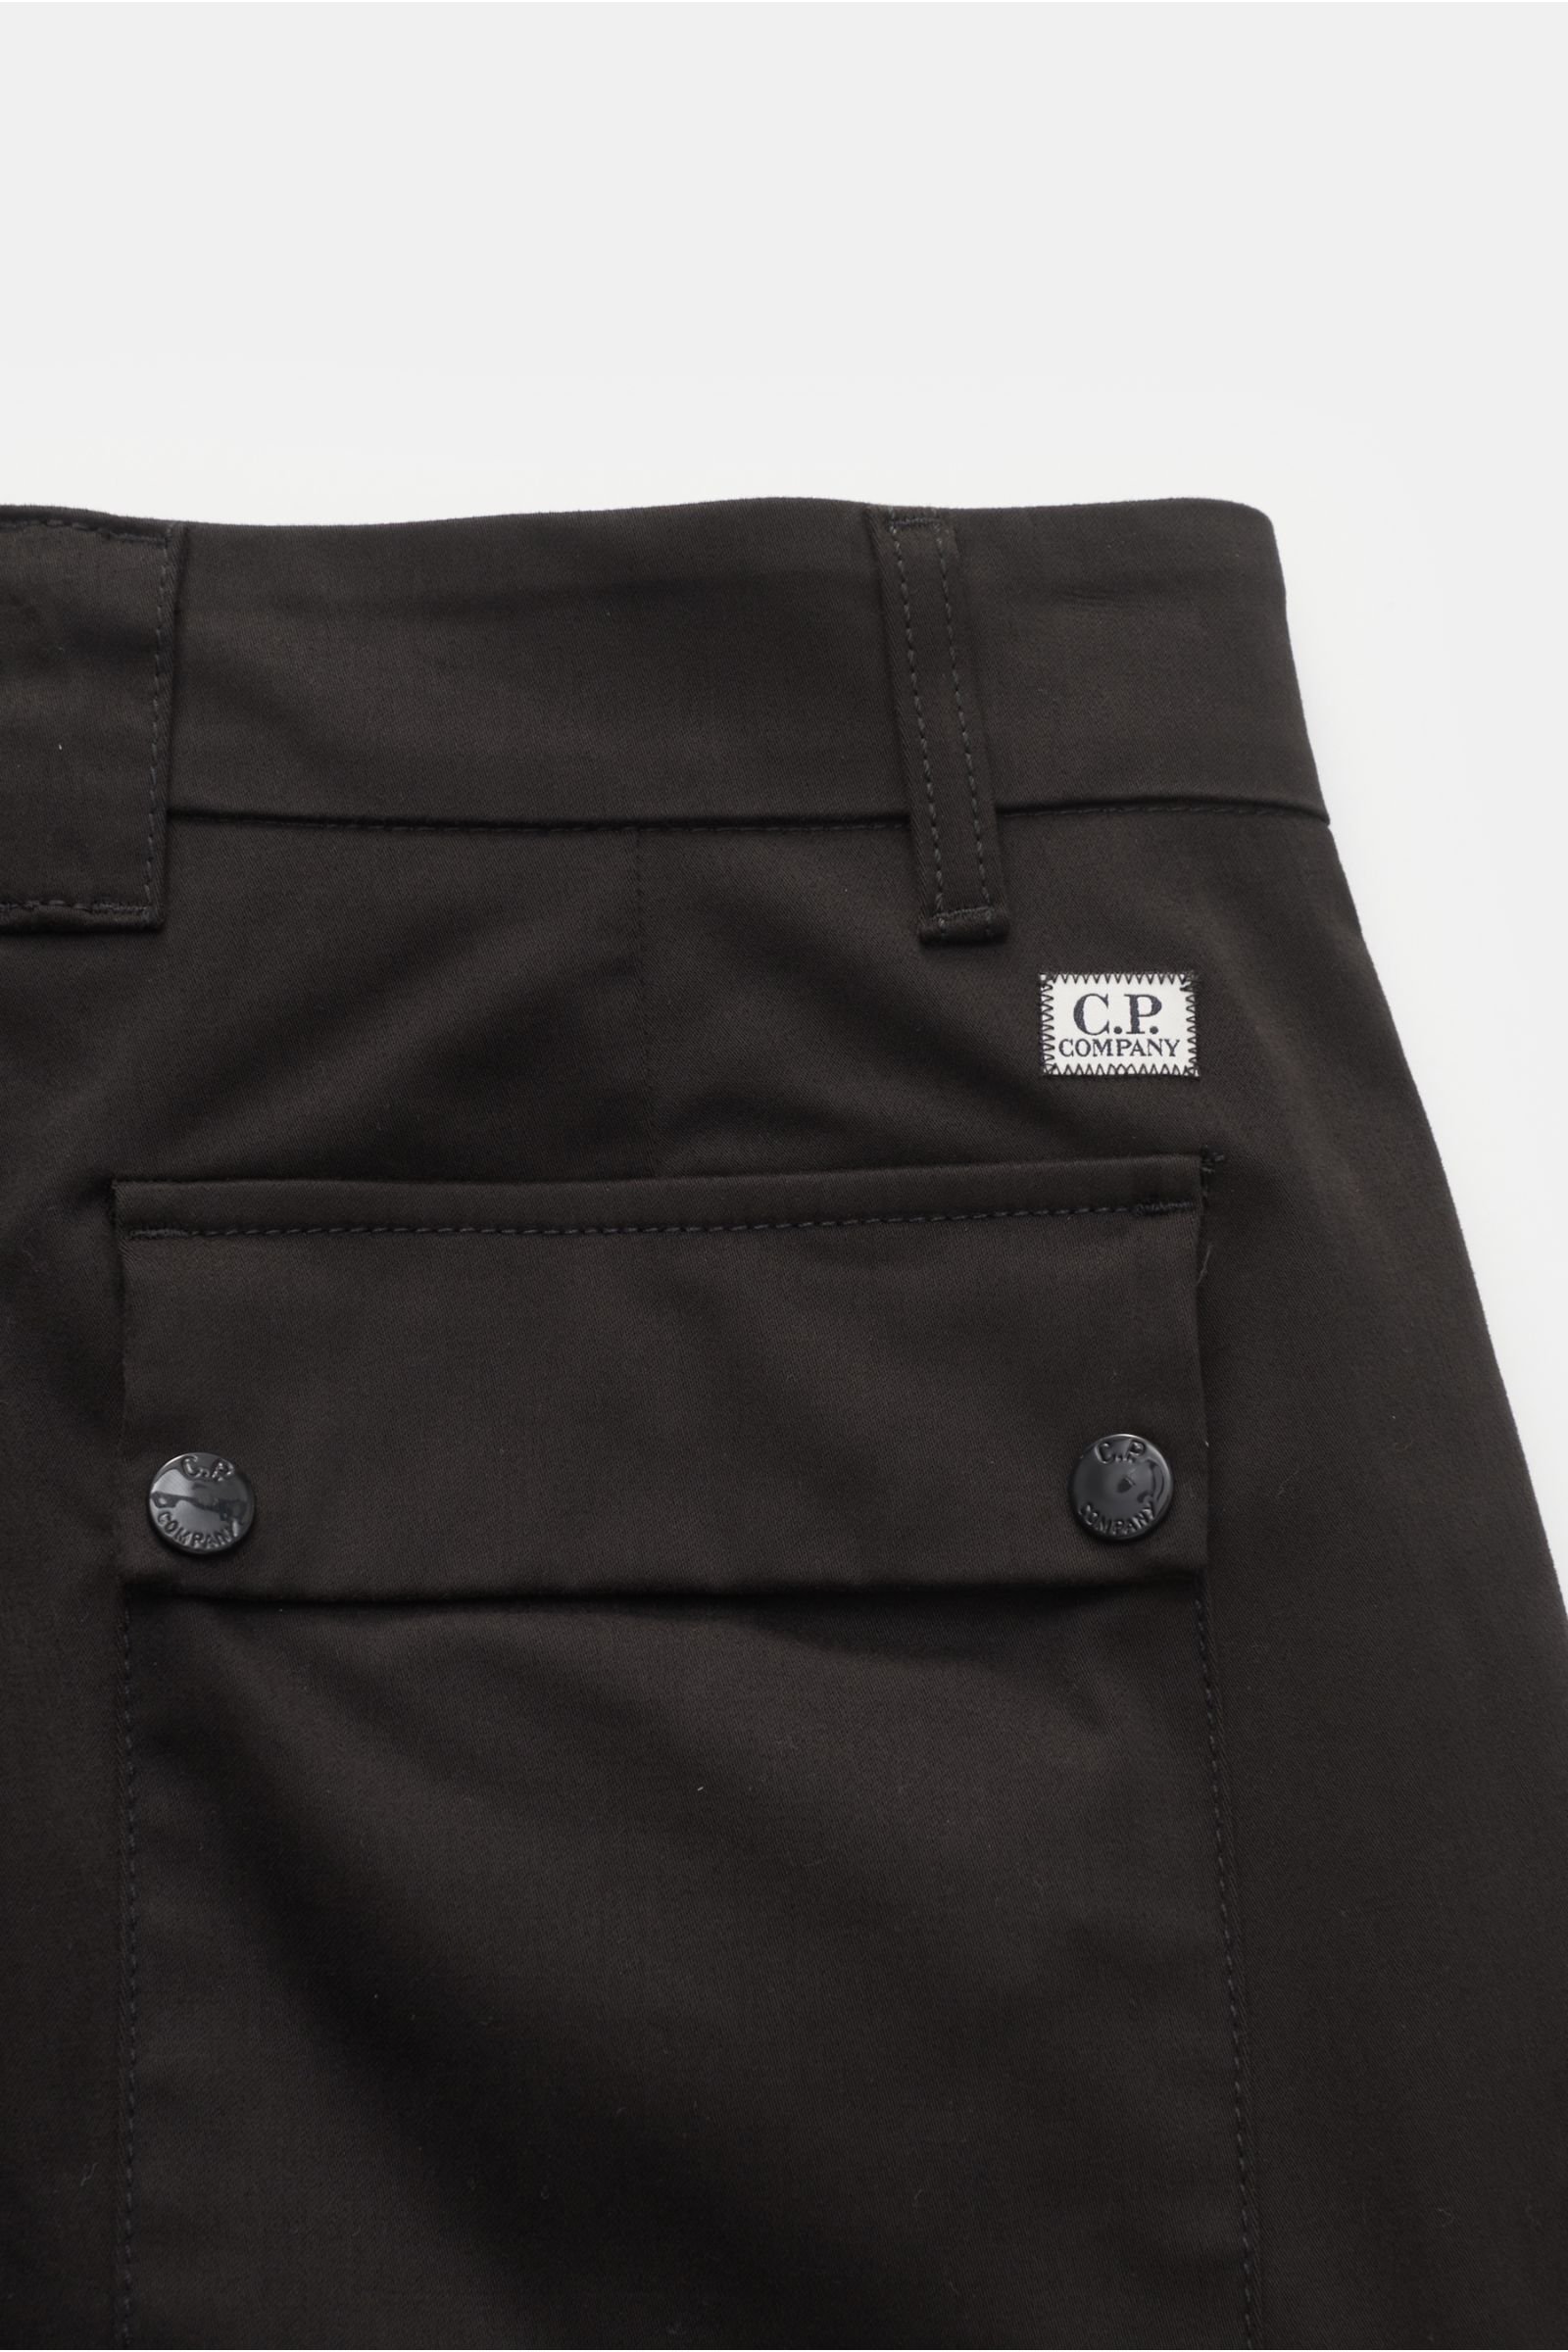 C.P. COMPANY cargo trousers 'Ergonomic Fit' black | BRAUN Hamburg